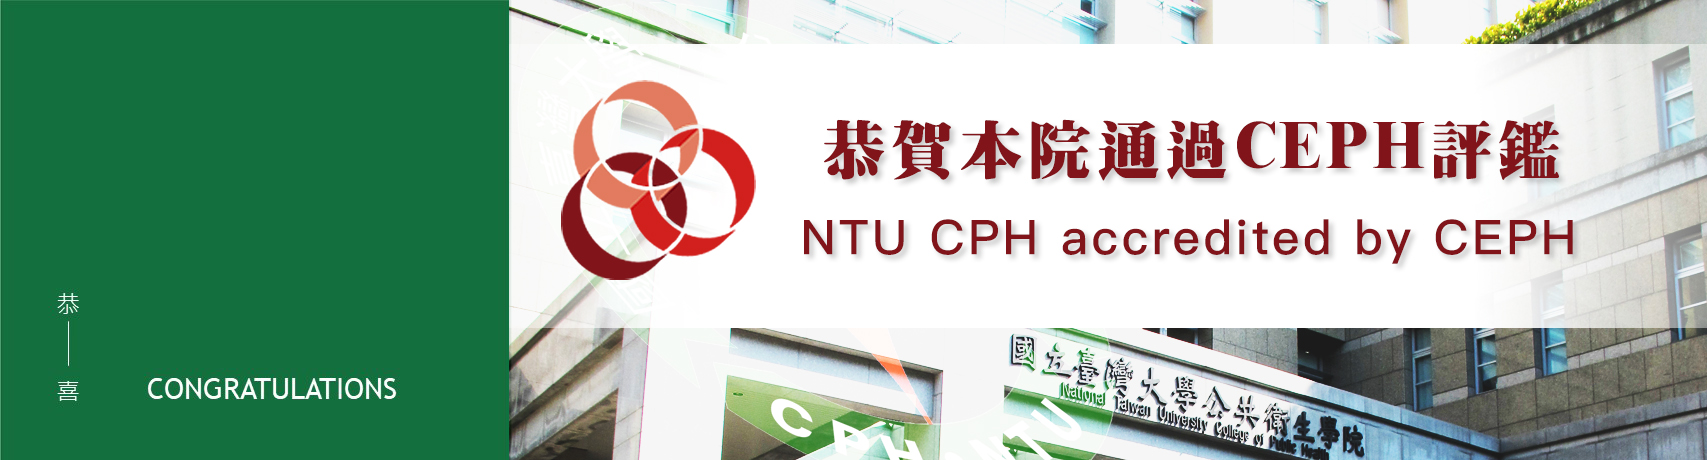 NTU CPH accredited by CEPH